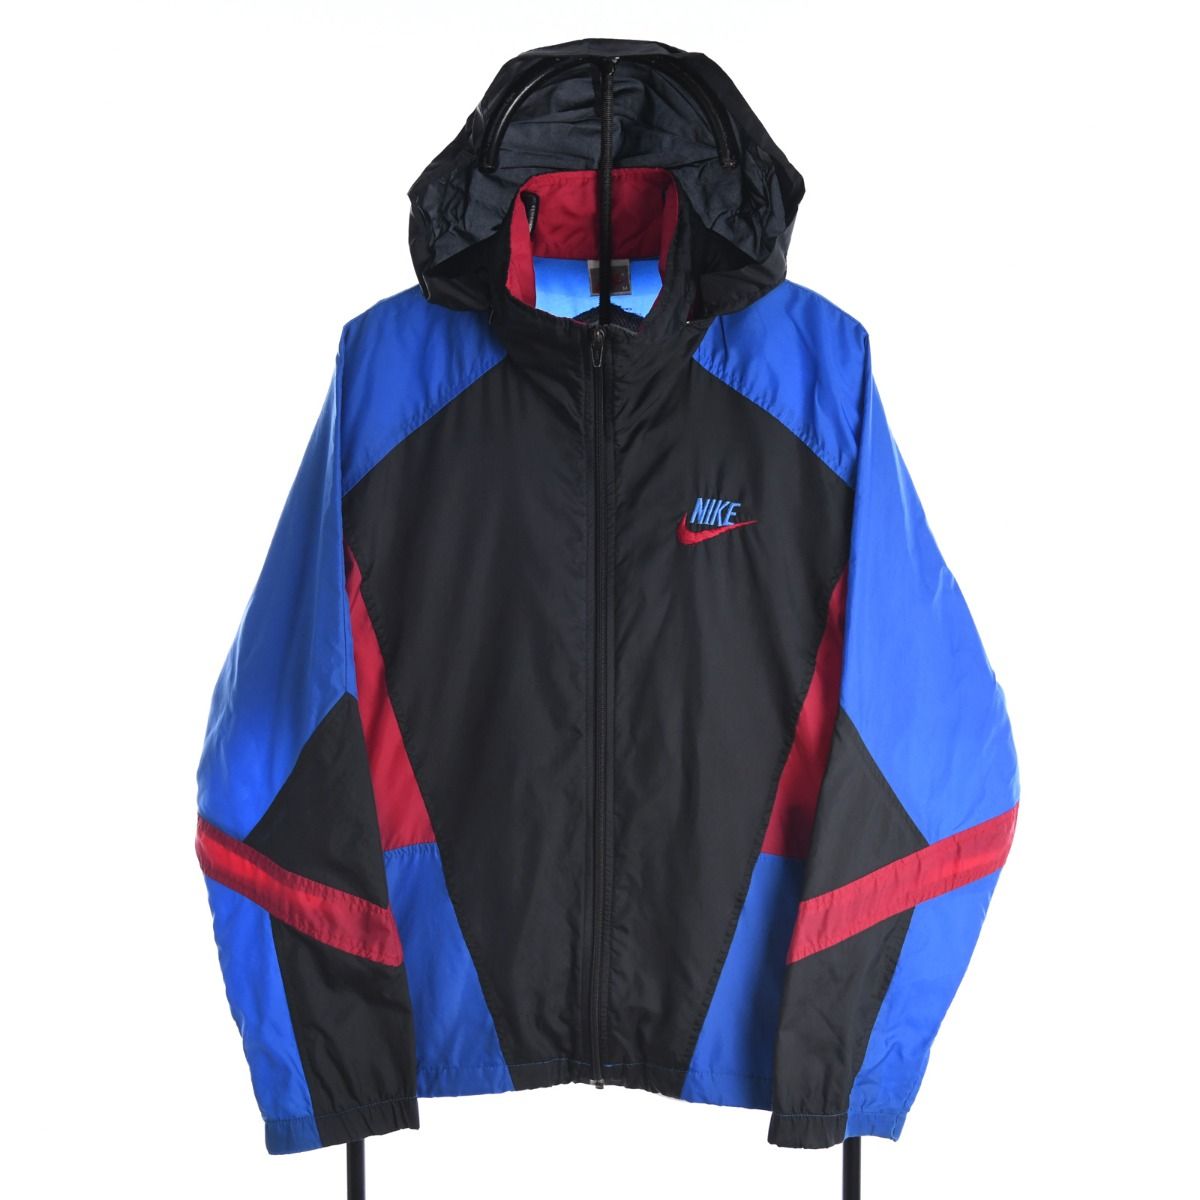 Nike 1990s Shell Jacket